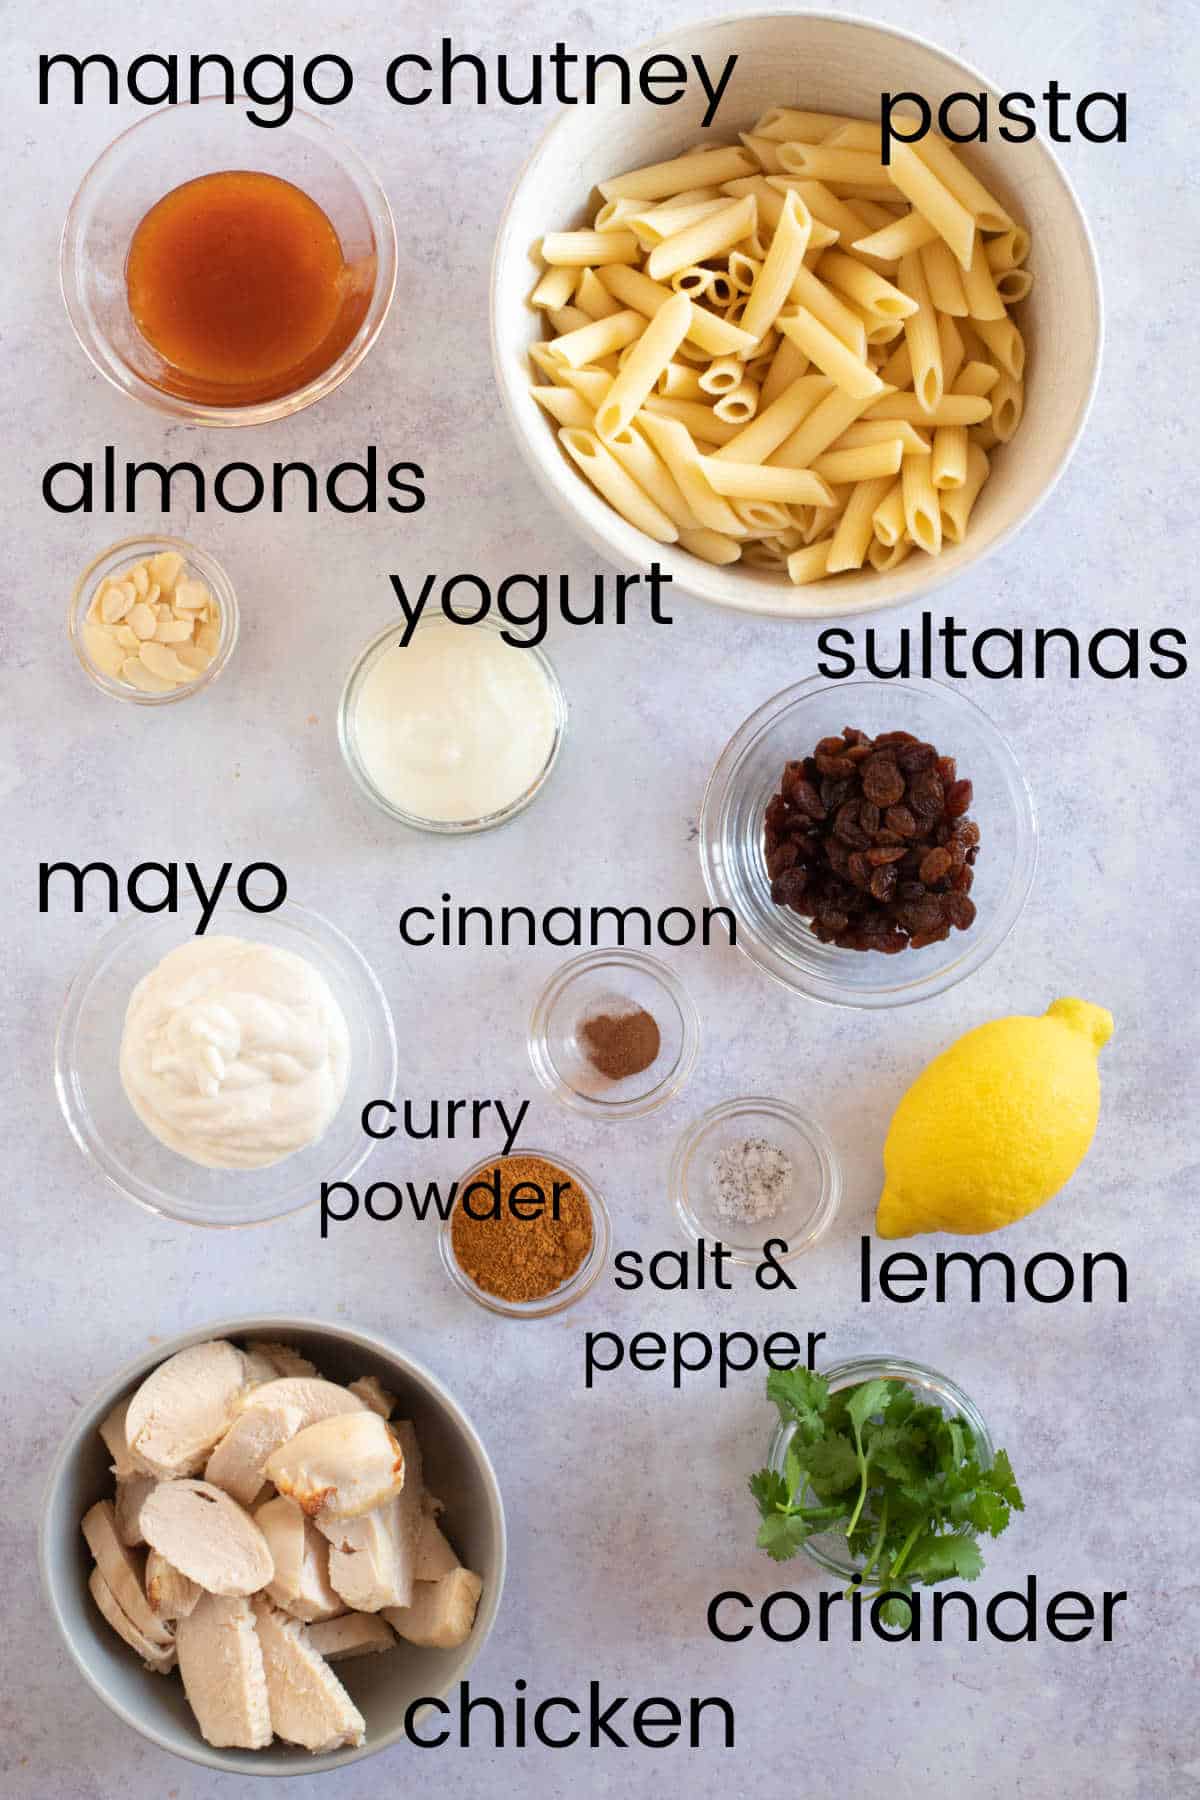 Ingredients for coronation chicken pasta salad.